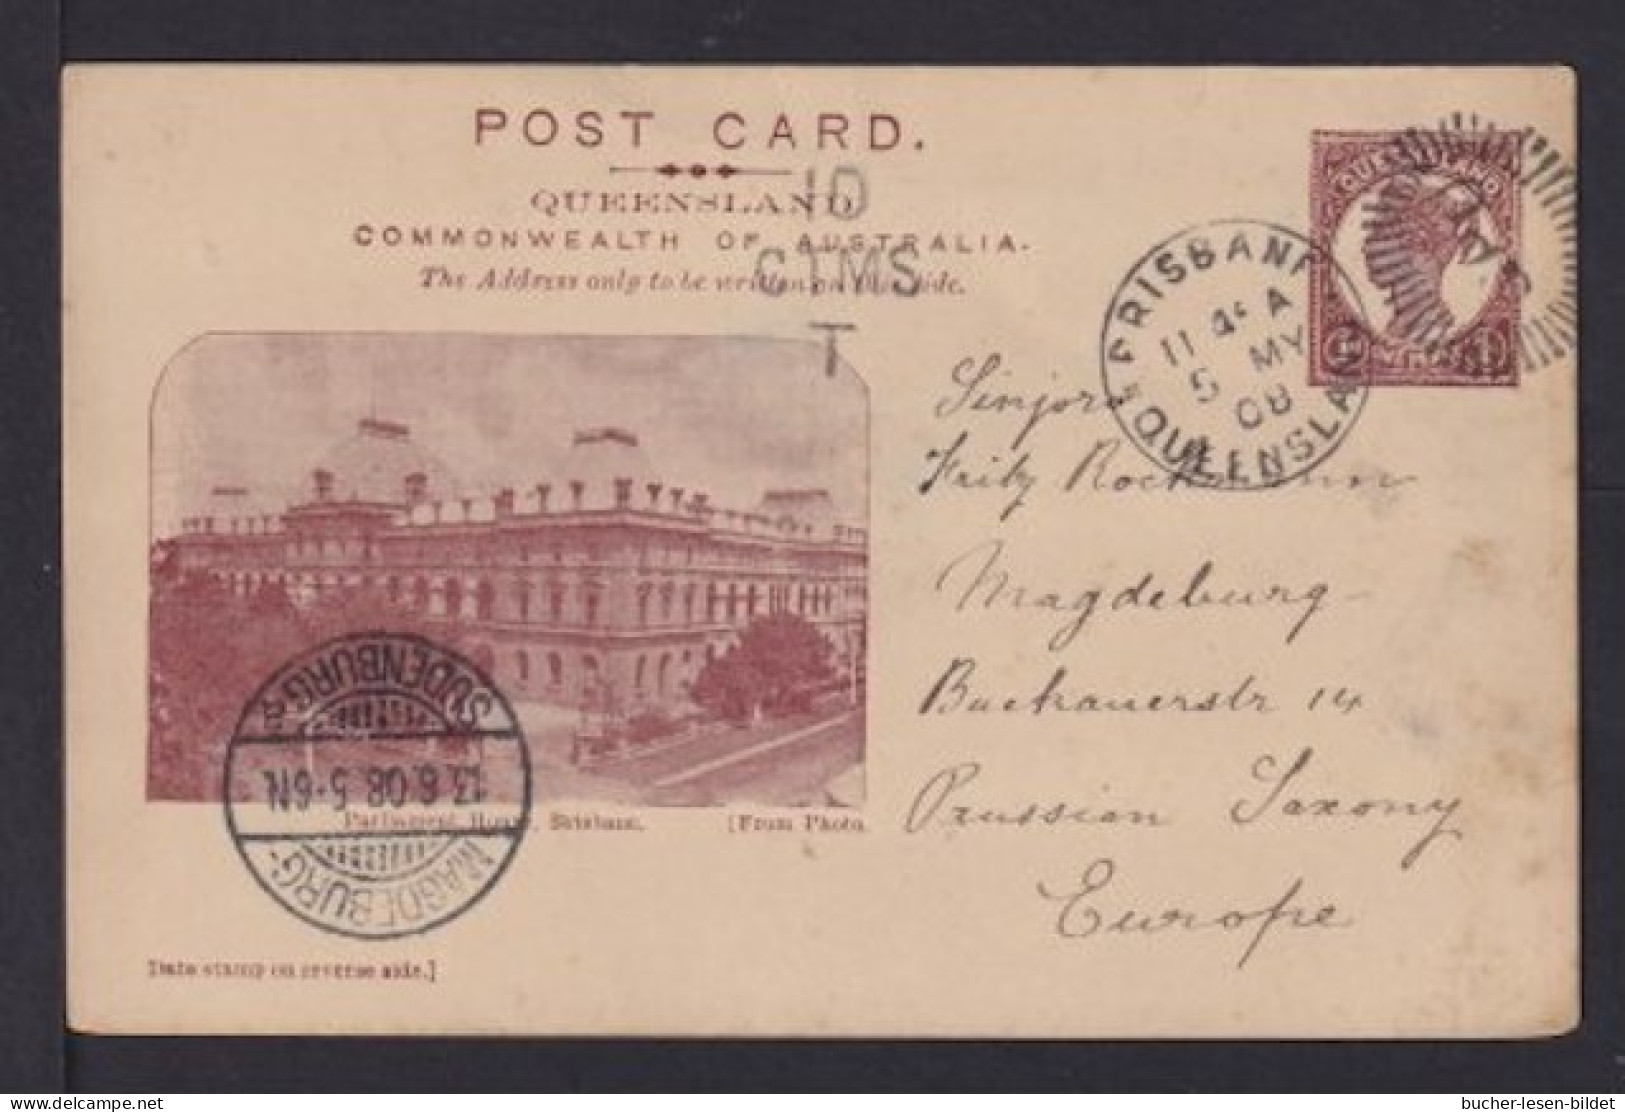 1908 - 1 P. Bild Ganzsache "Parlament House" Ab Brisbane Nach Magdeburg - Stempel "10/CTMS/T" - Storia Postale